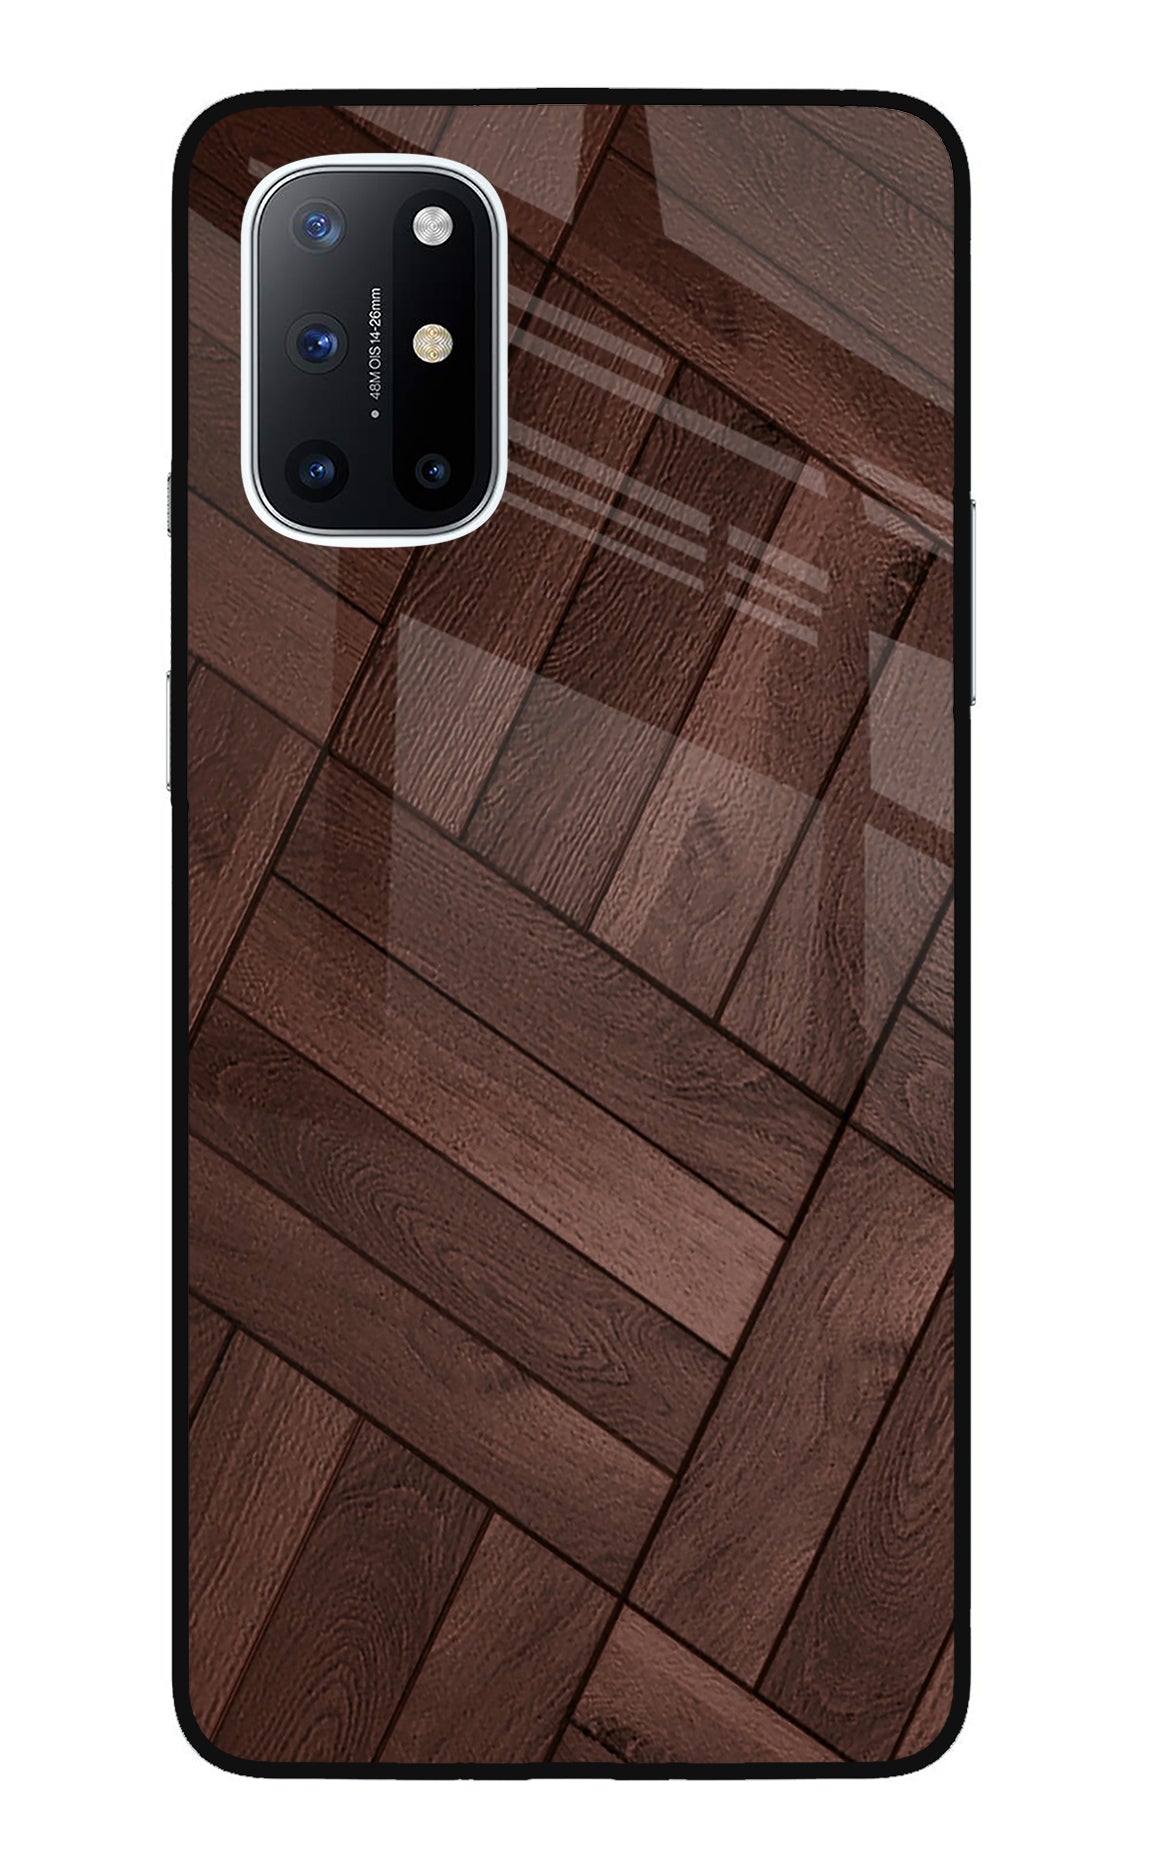 Wooden Texture Design Oneplus 8T Glass Case